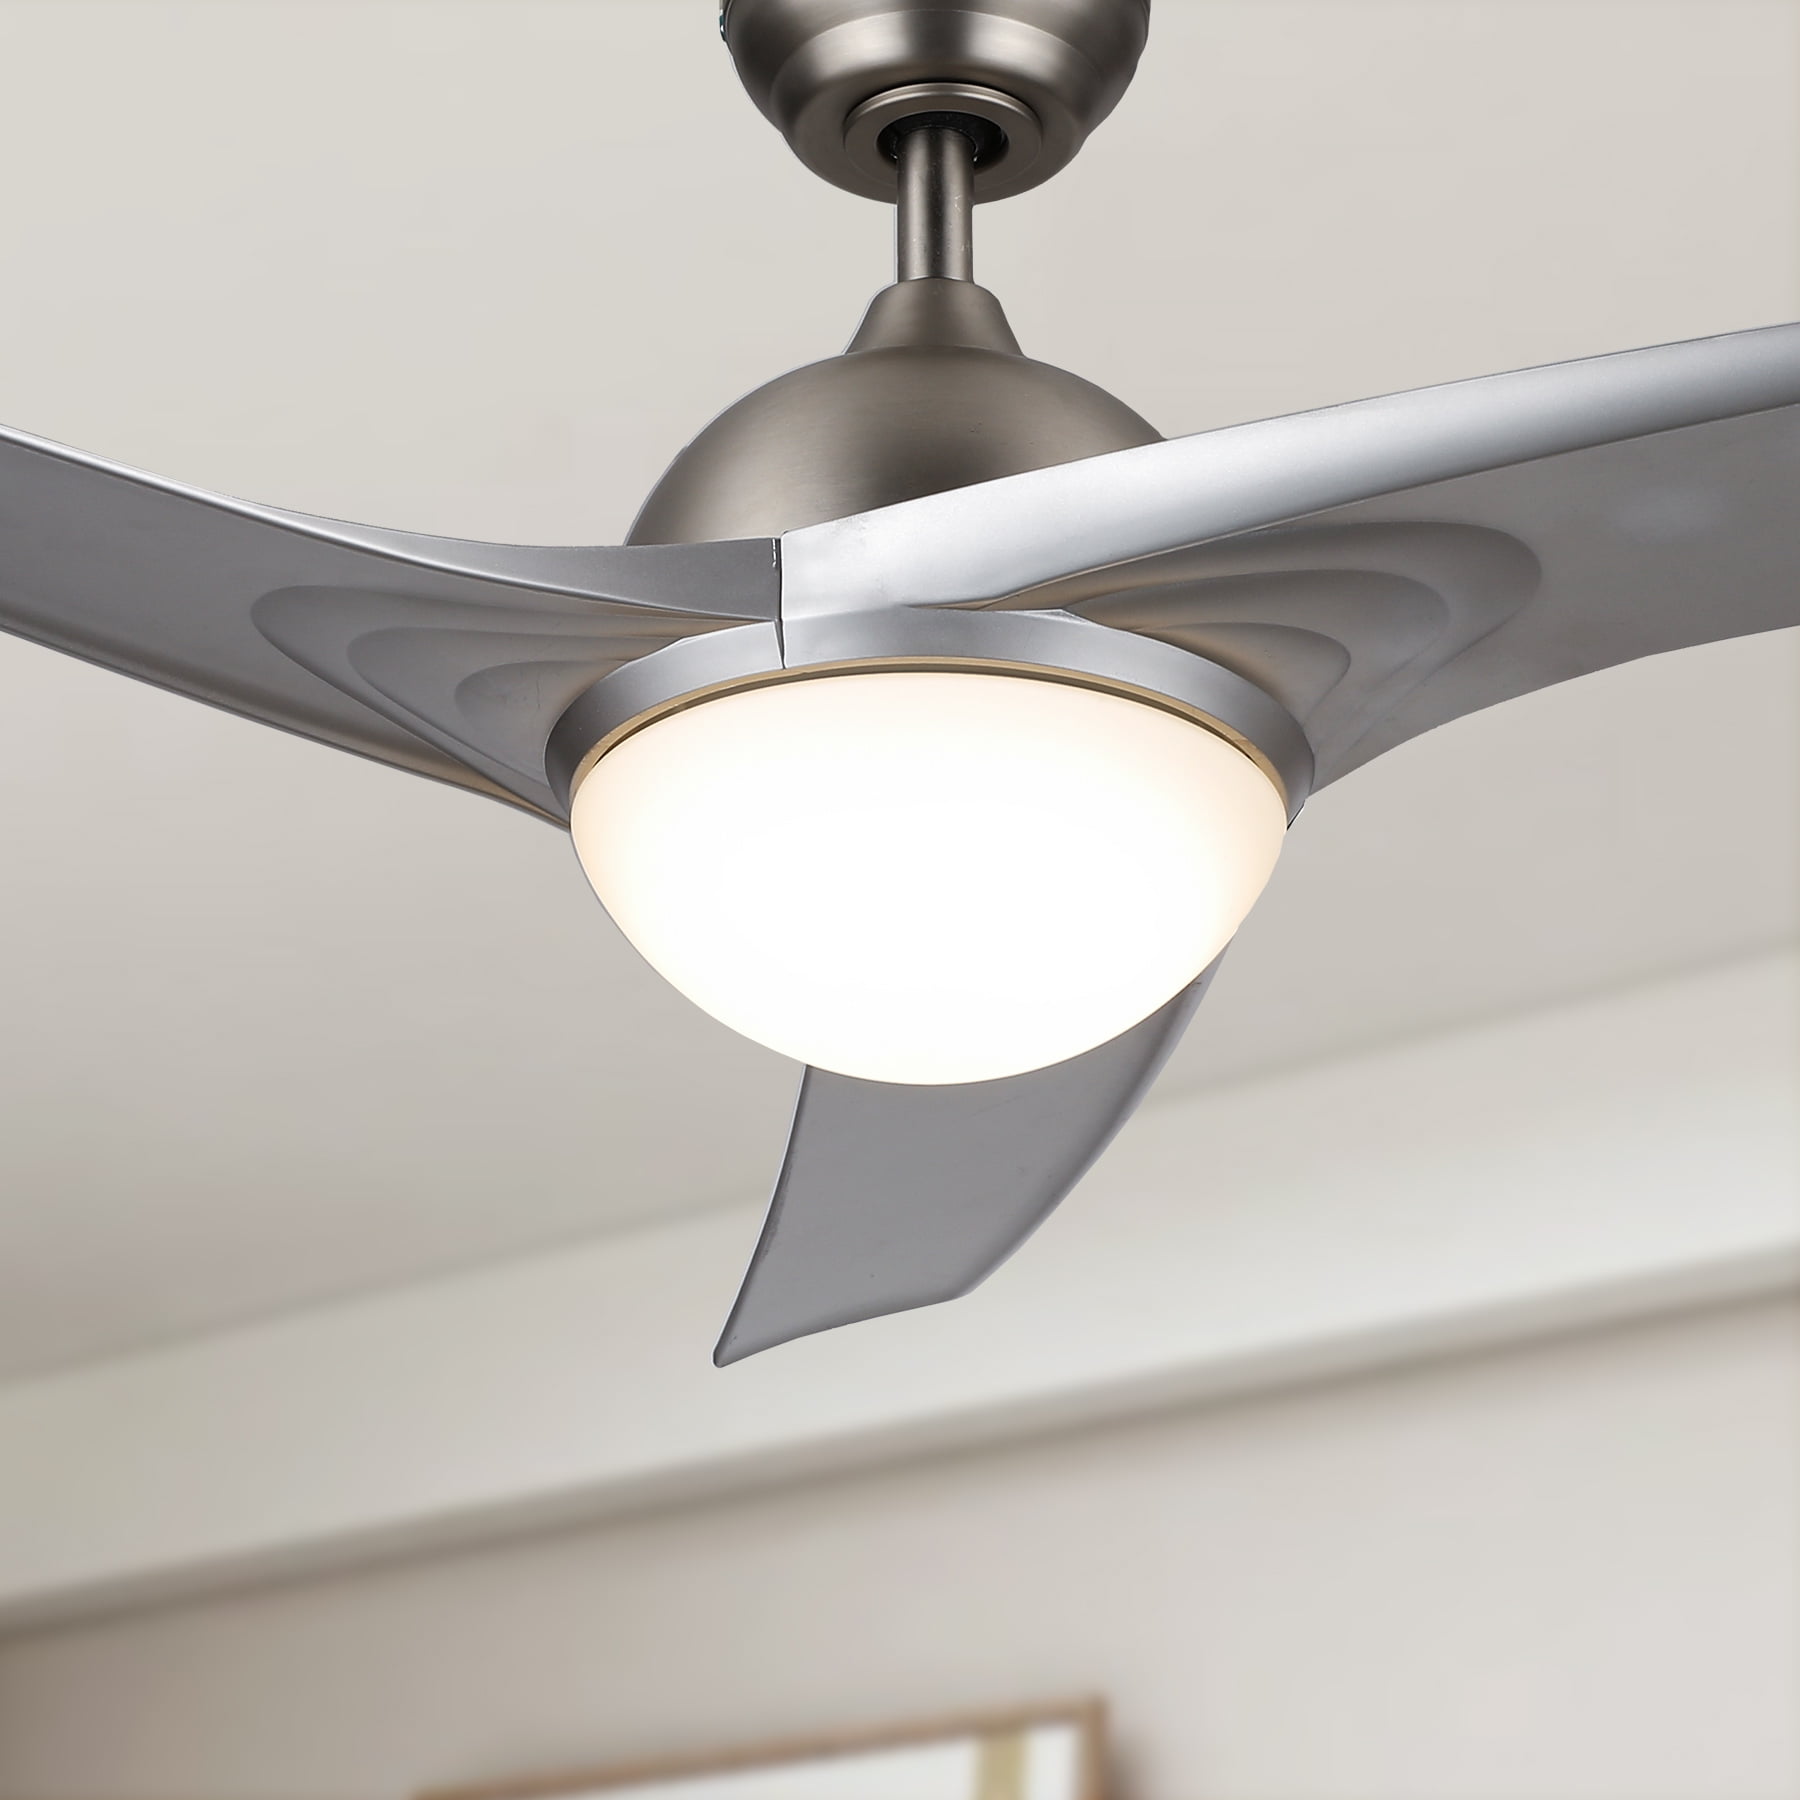 UL Listed 52” Ceiling Fan Light Brushed Nickel Finish w/ 3 White Walnut Blades. 